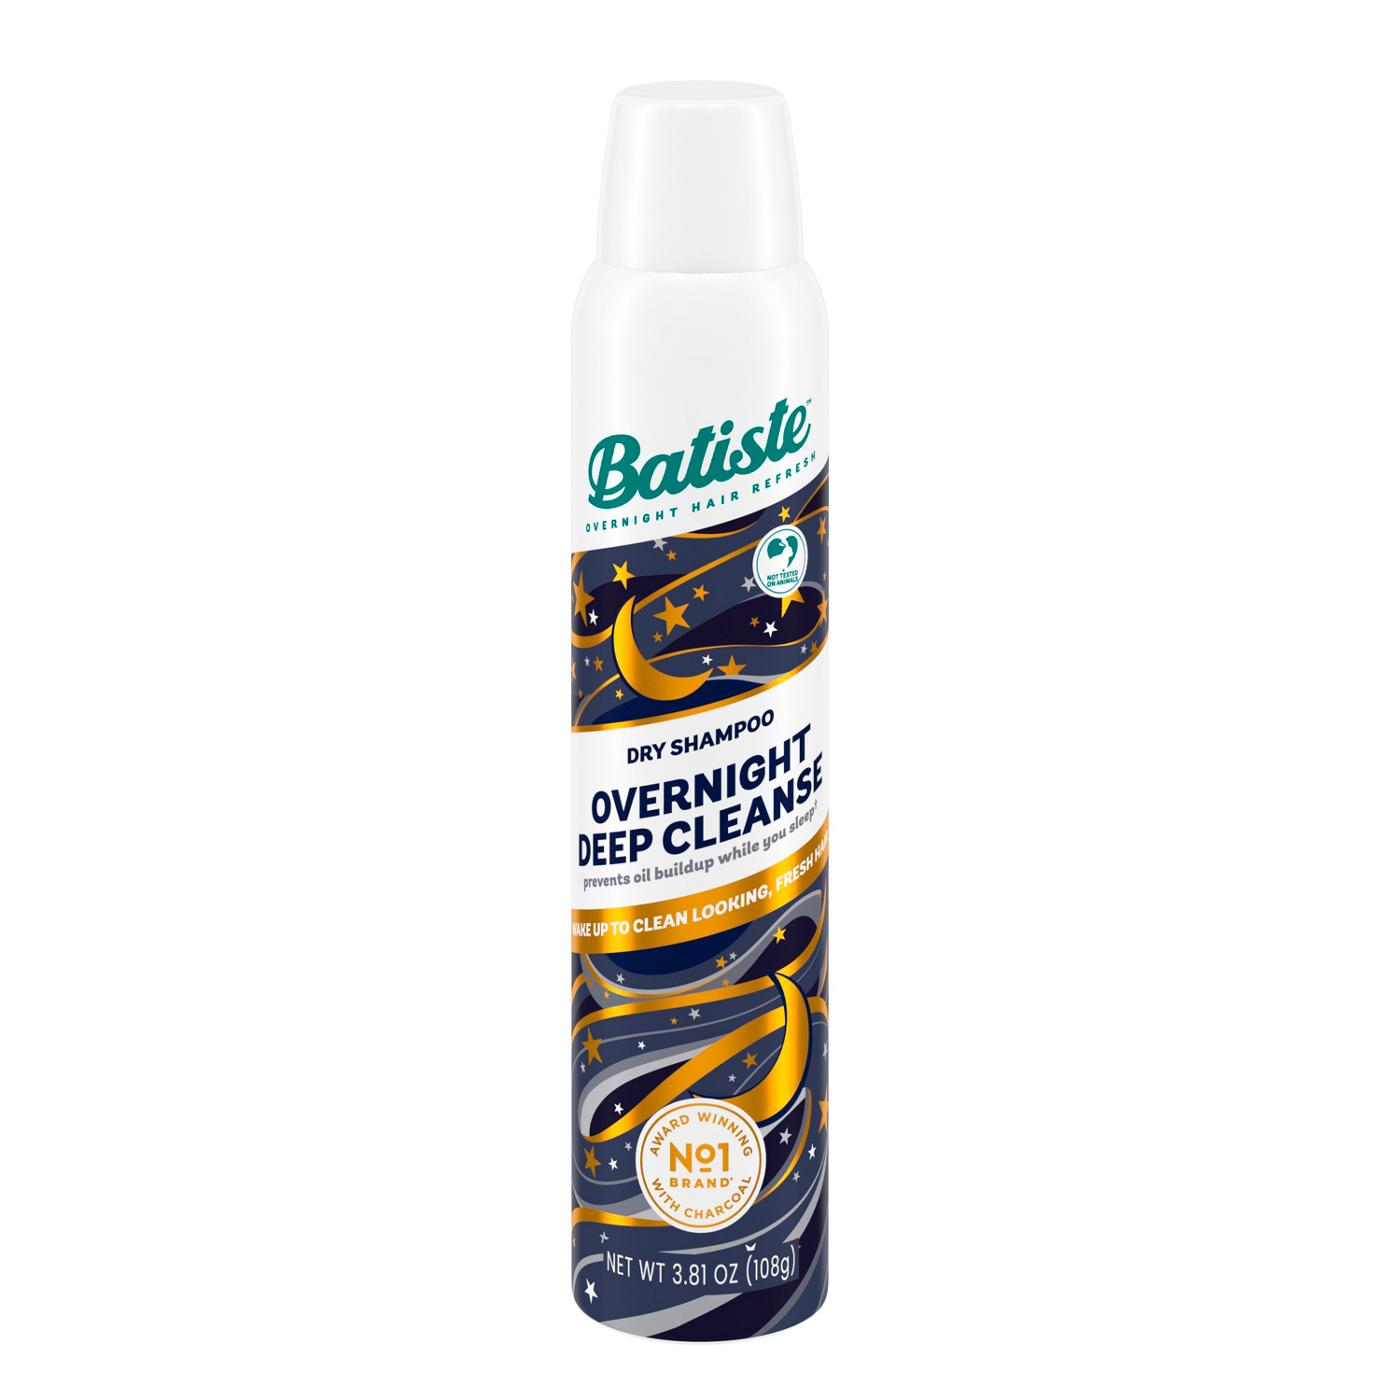 Batiste Dry Shampoo - Overnight Deep Cleanse; image 1 of 2